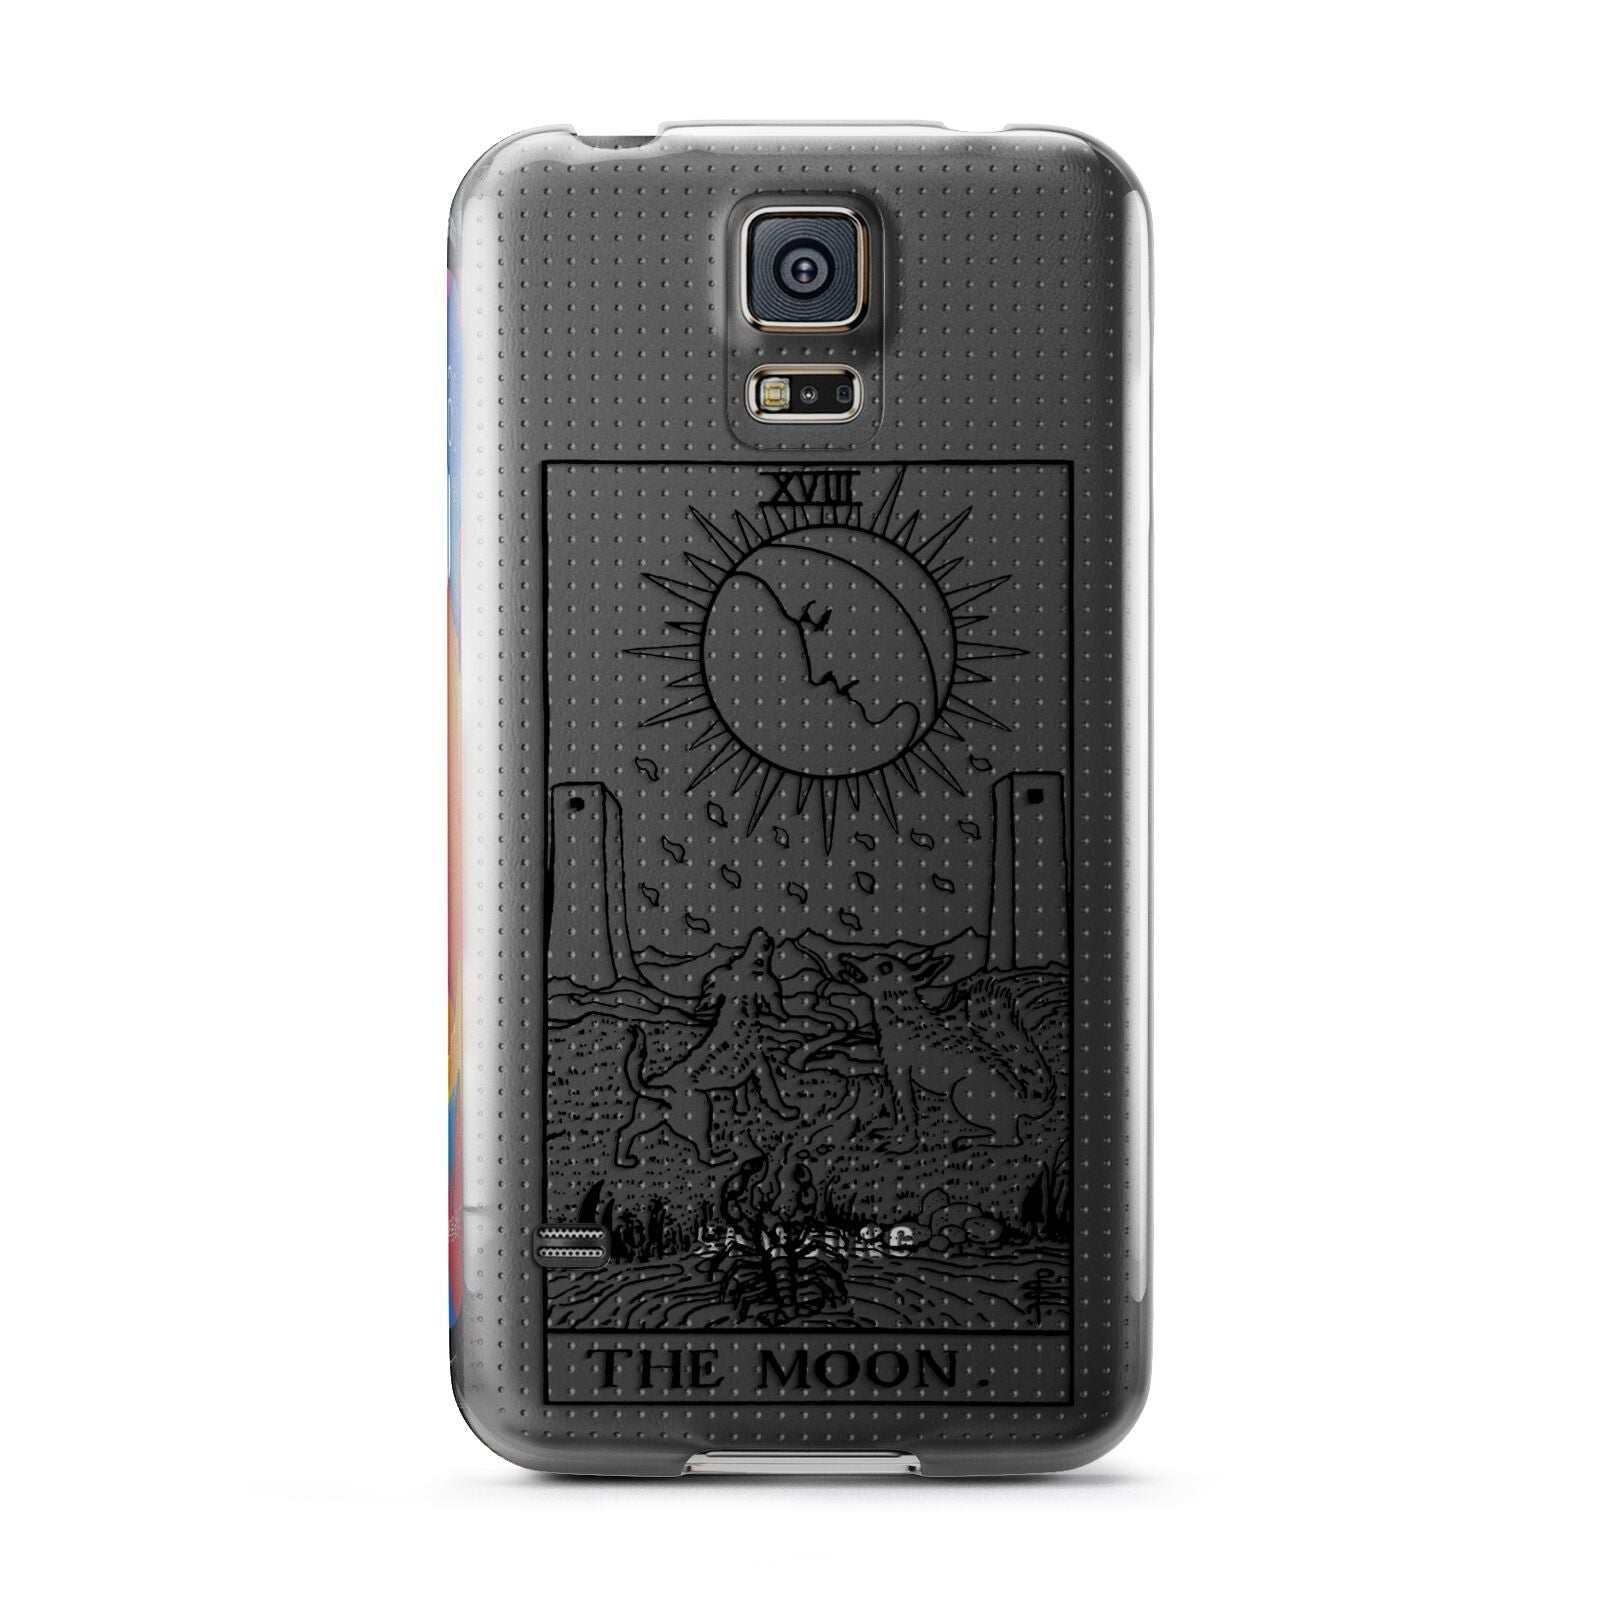 The Moon Monochrome Samsung Galaxy S5 Case